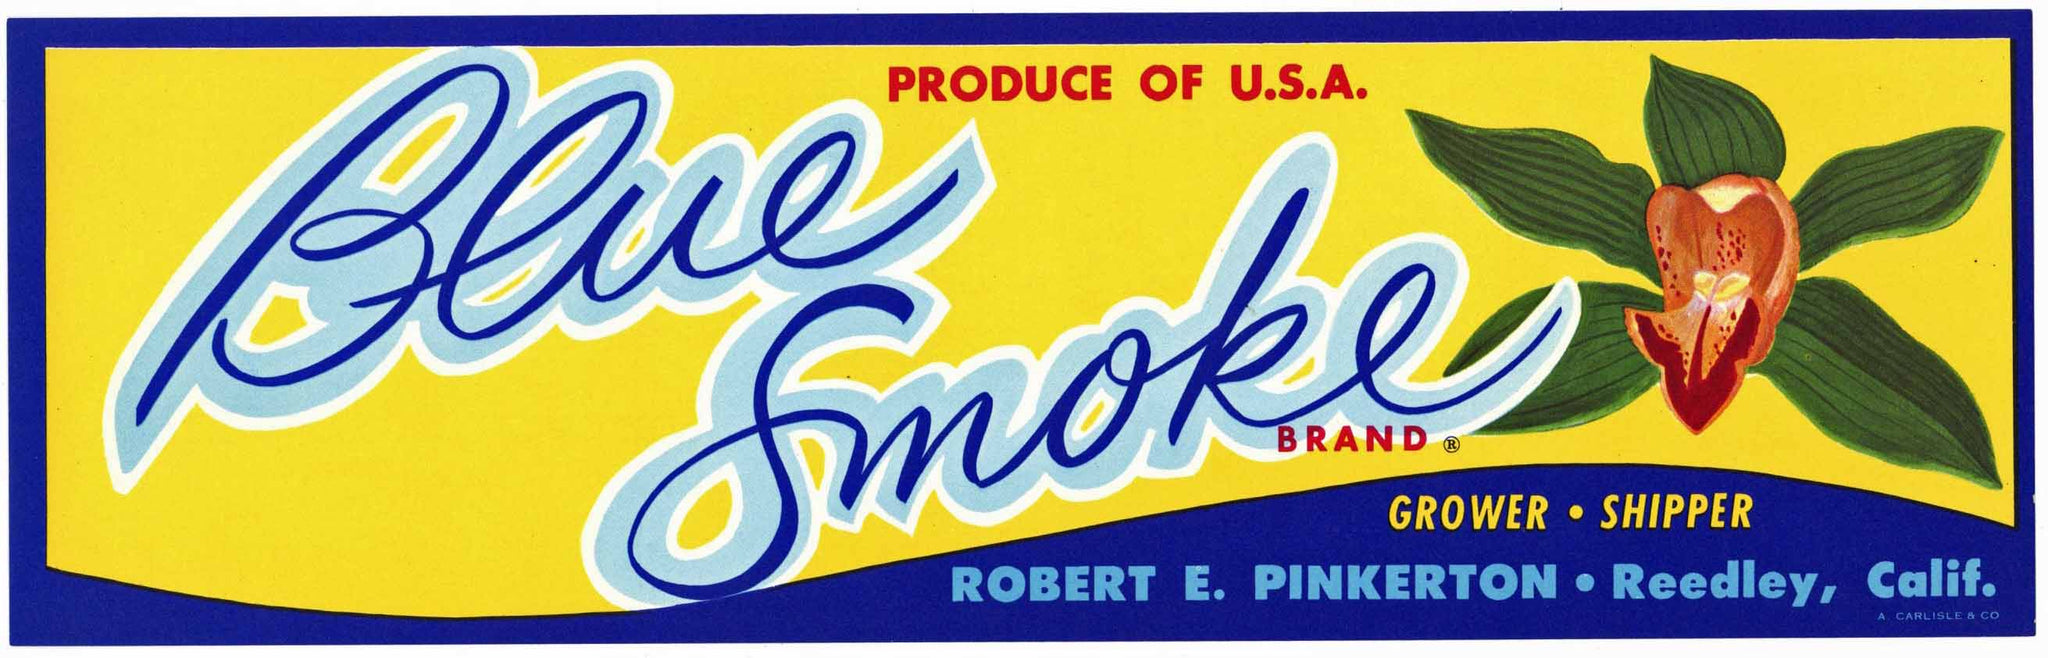 Blue Smoke Brand Vintage Reedley Produce Crate Label